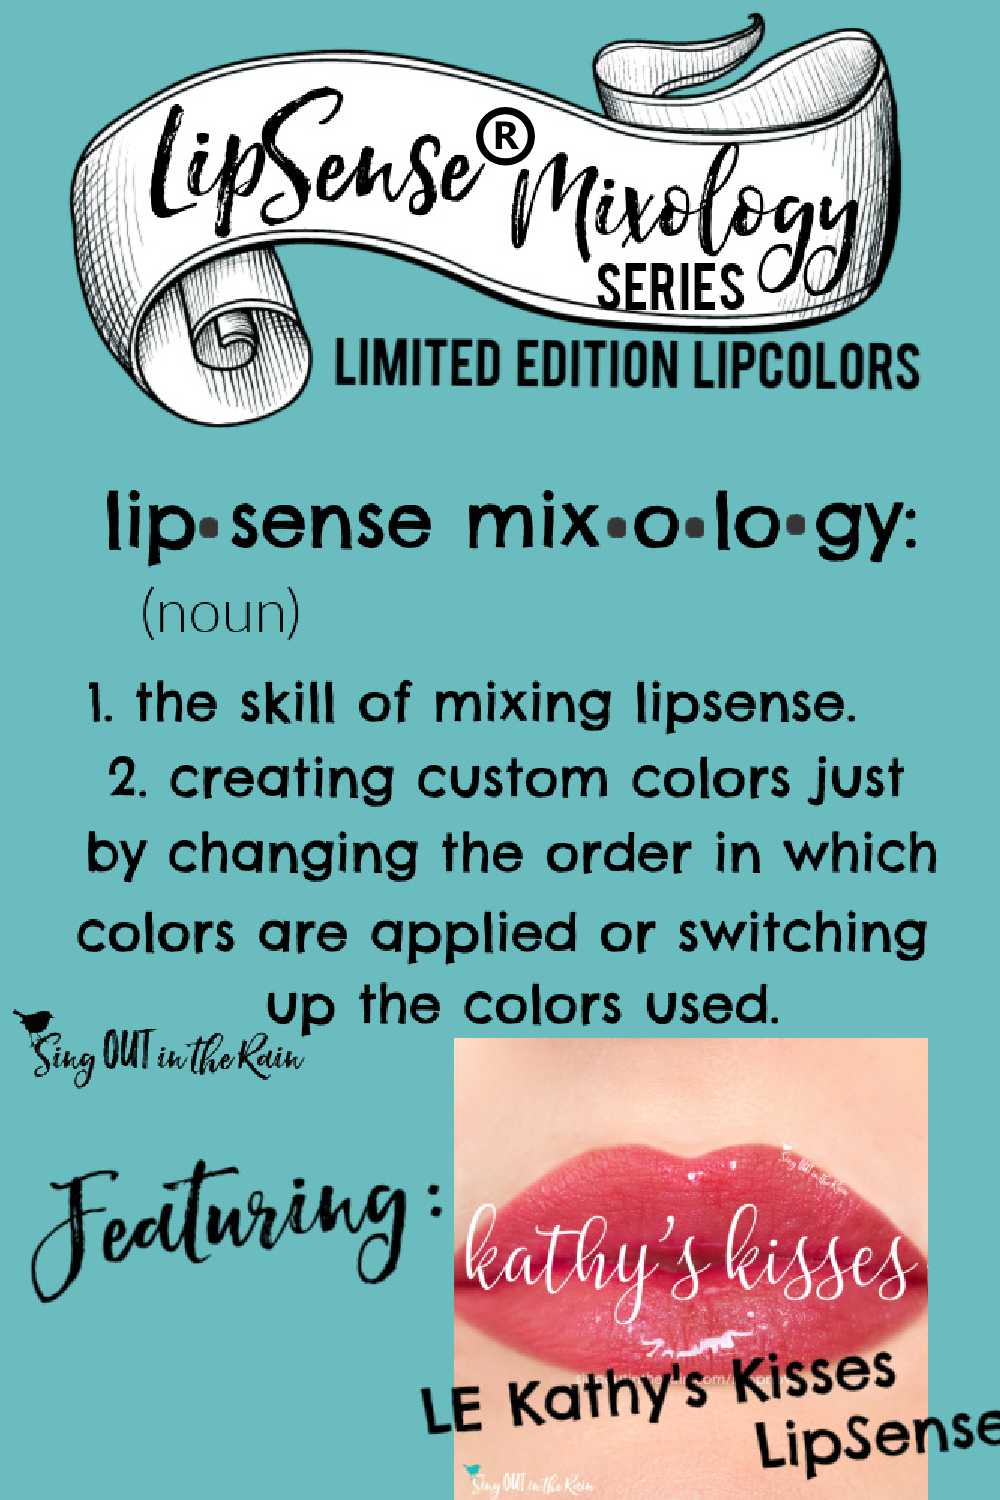 The Ultimate Guide to Kathys Kisses LipSense Mixology